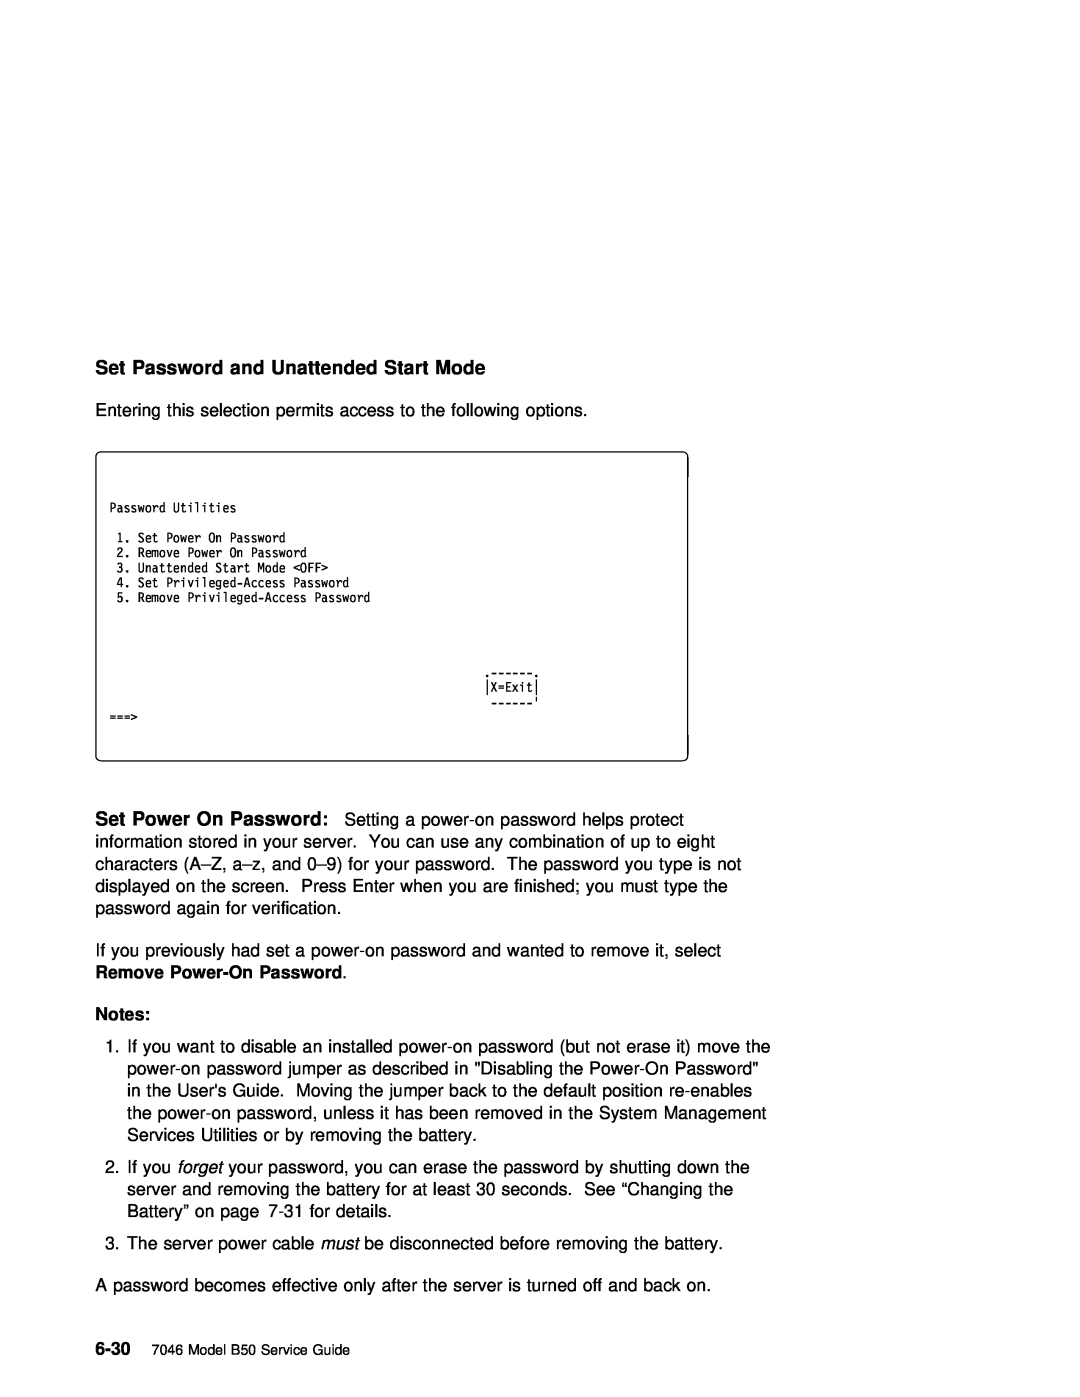 IBM B50 manual Set Password and Unattended Start Mode 